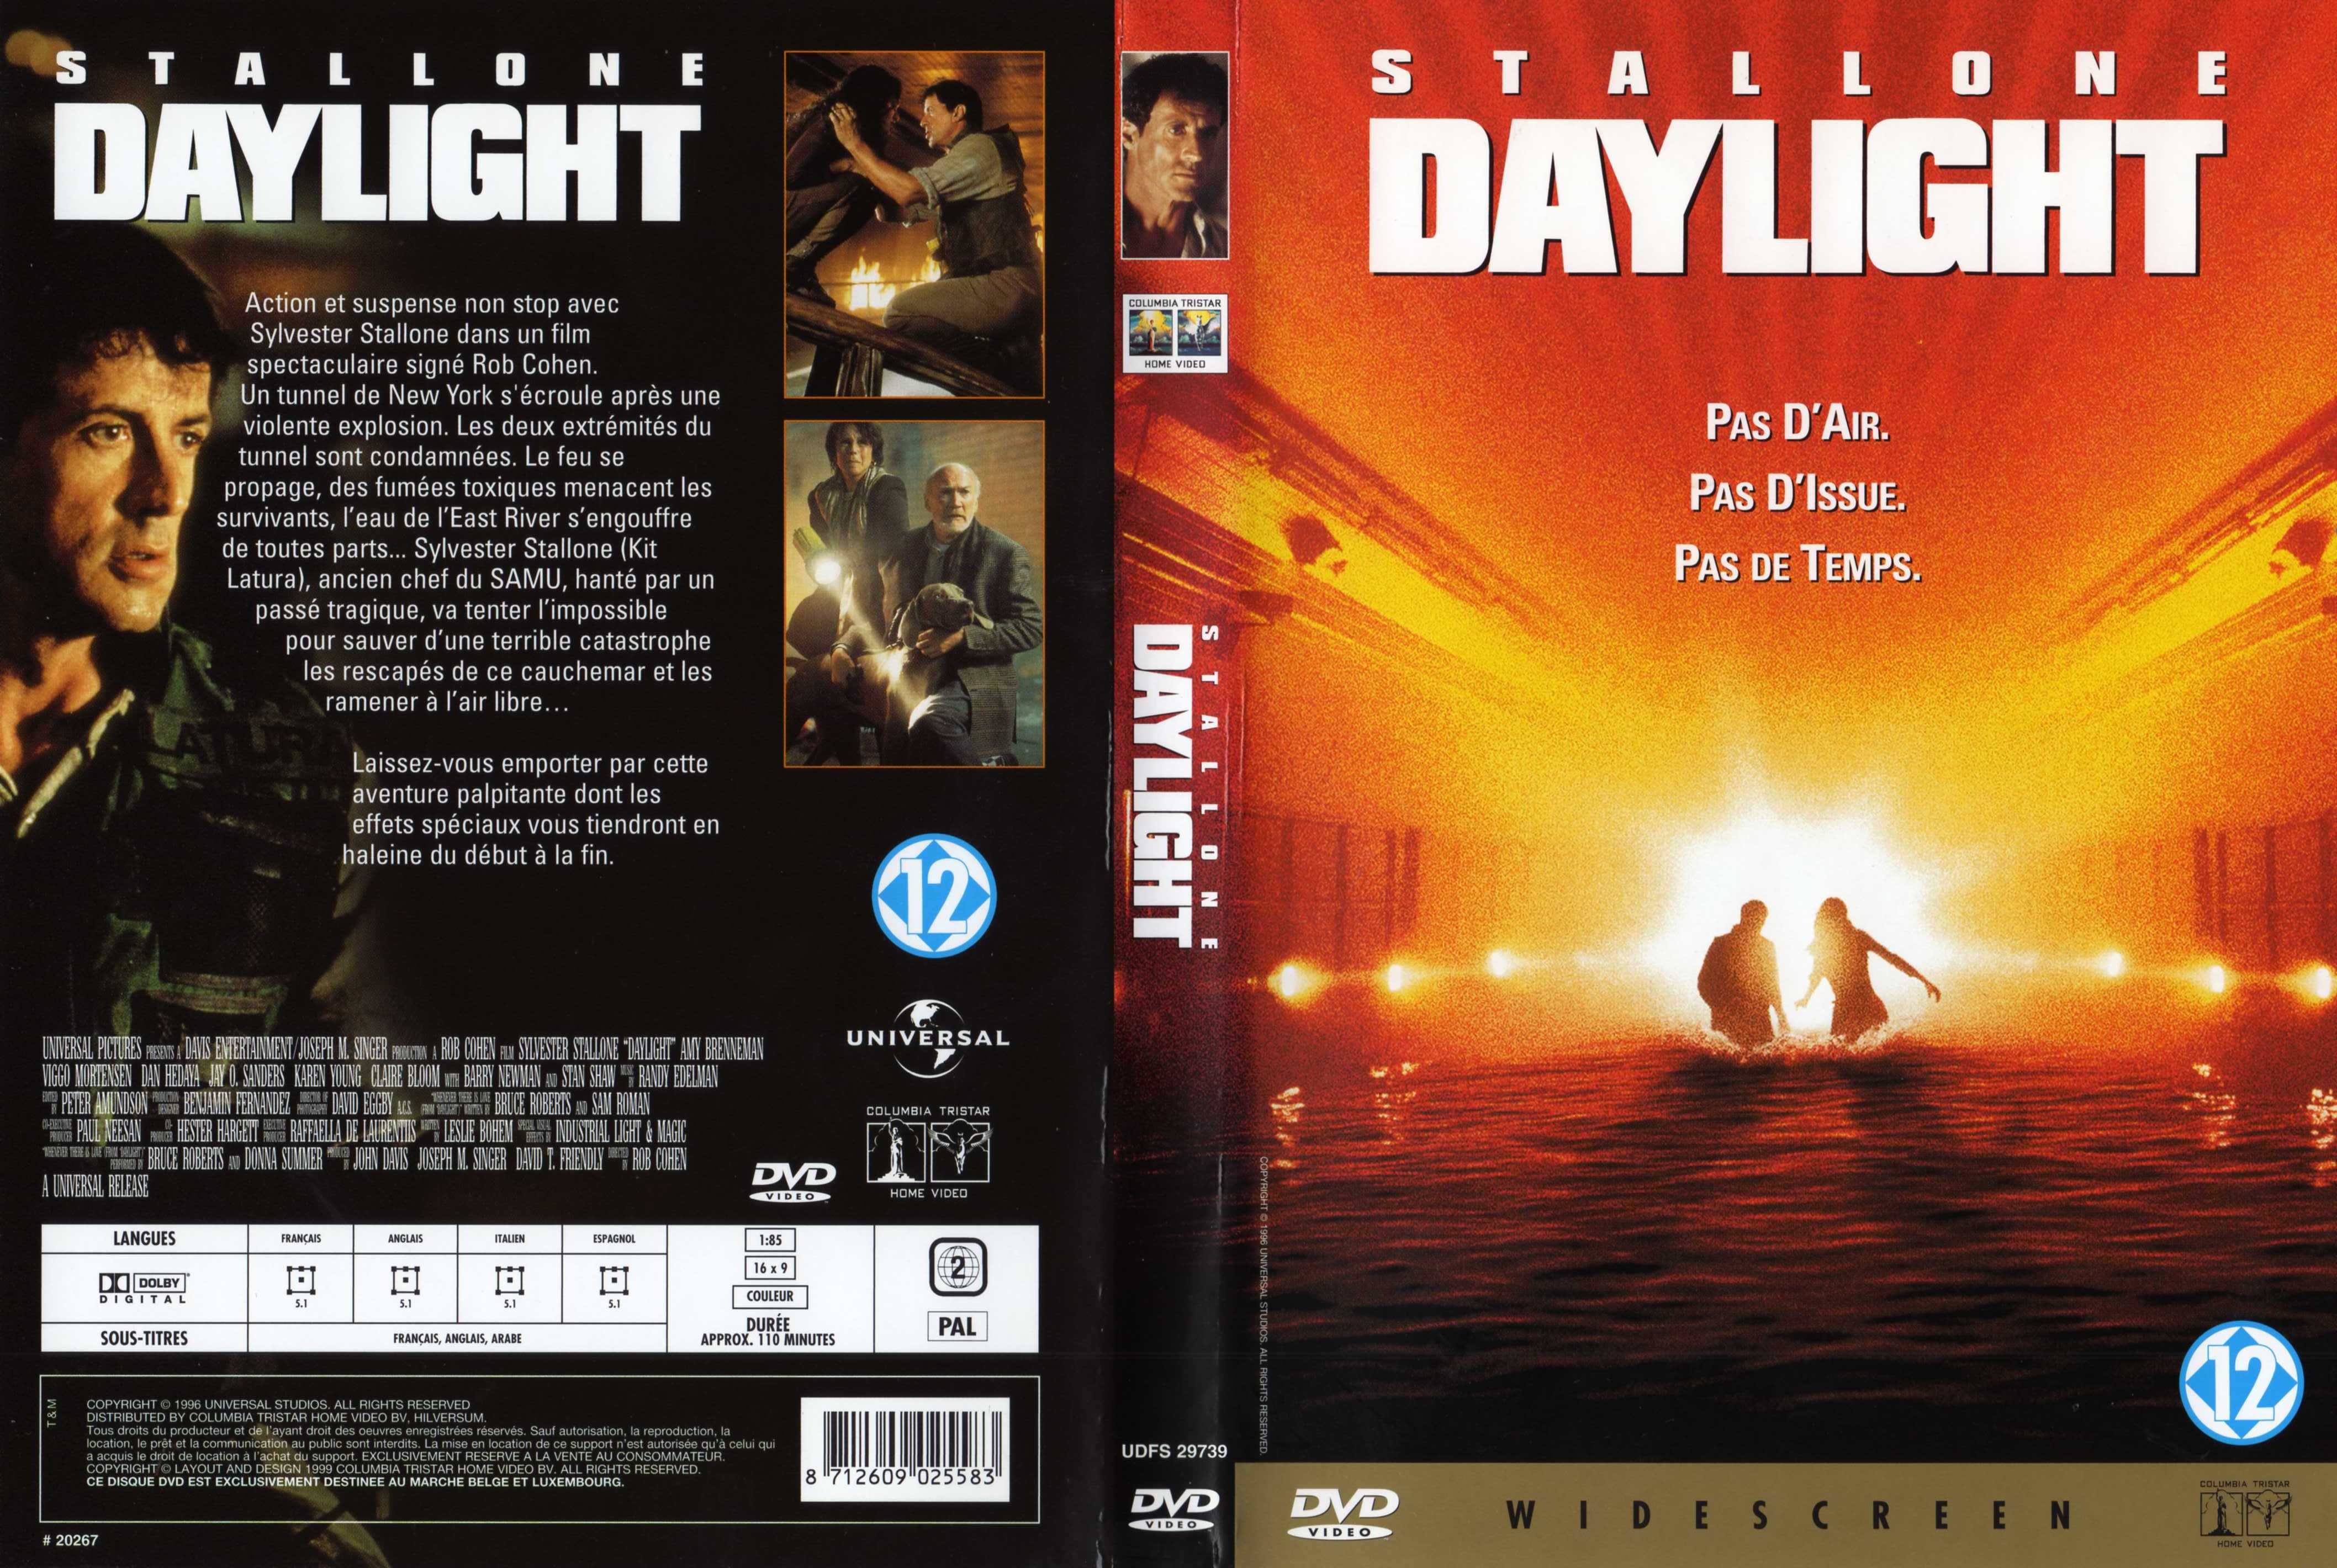 Jaquette DVD Daylight v3